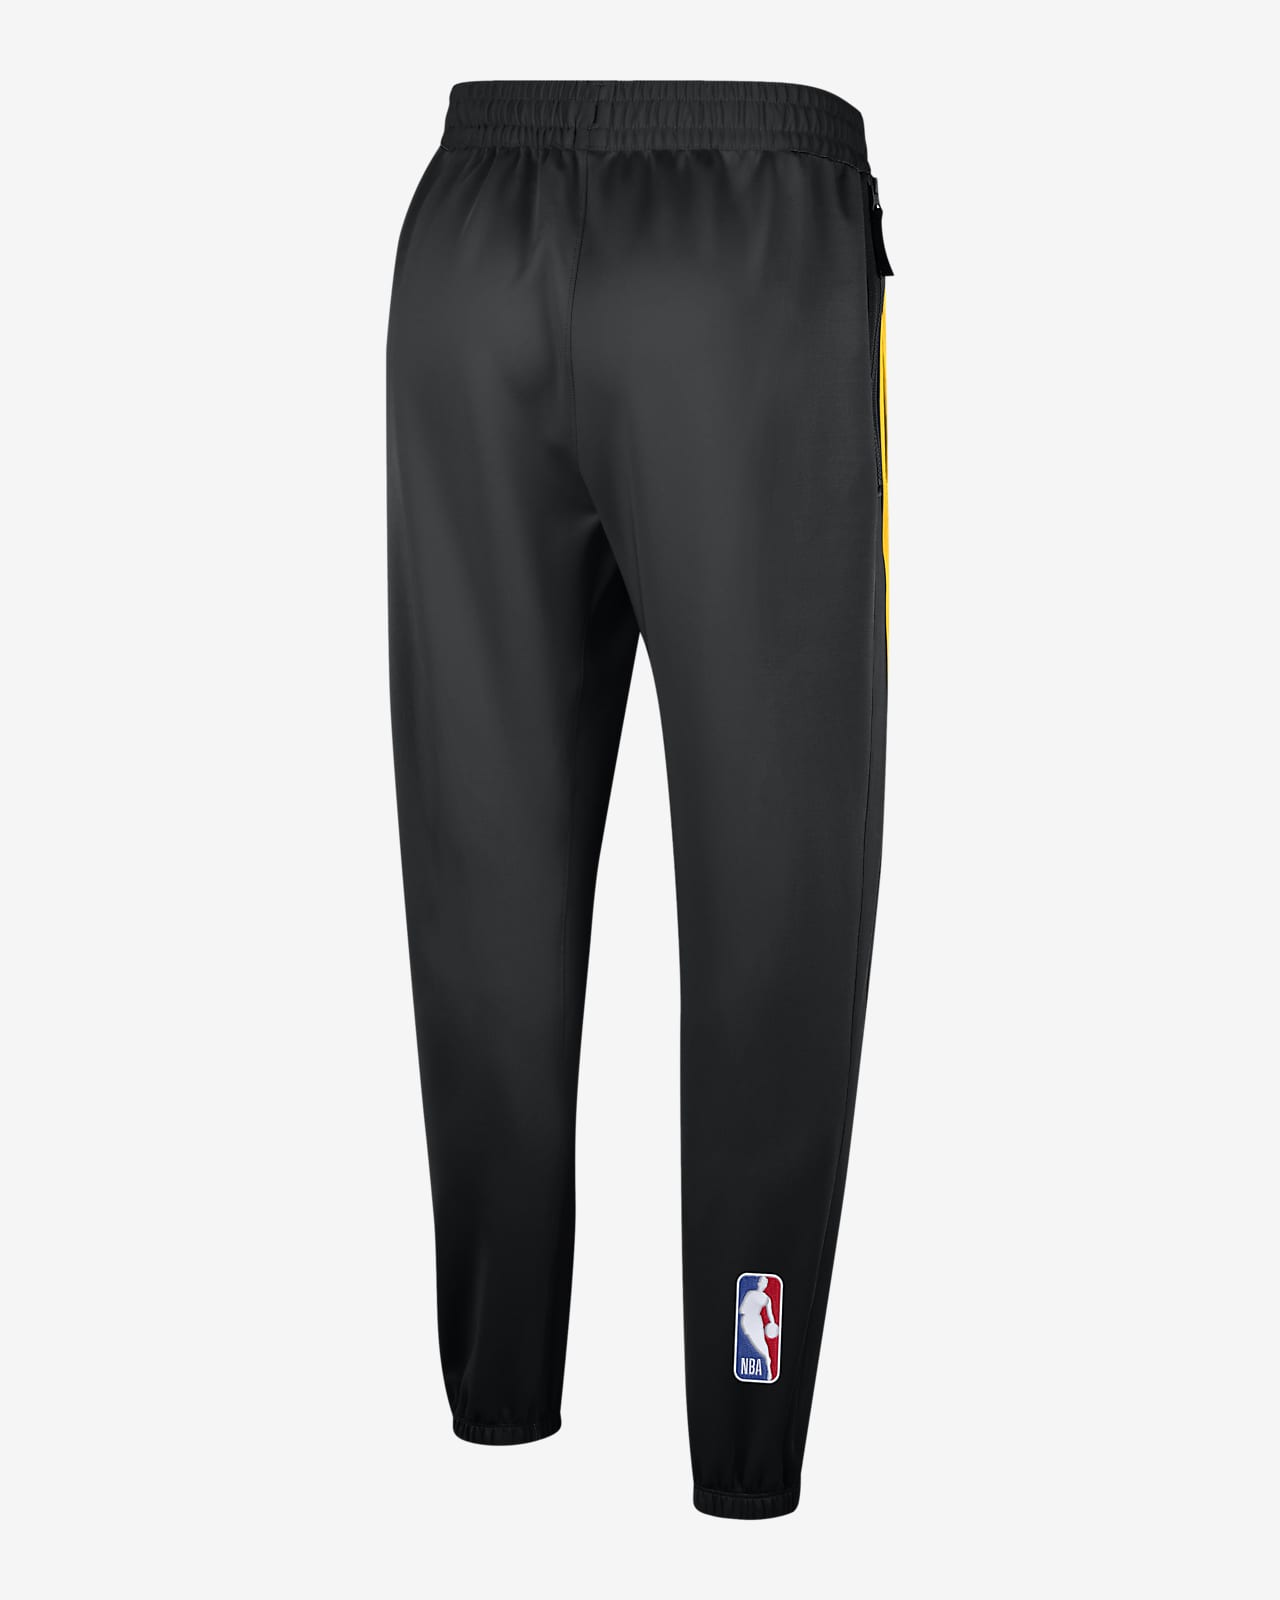 Golden State Warriors Starting 5 Men's Nike Therma-FIT NBA Pants.